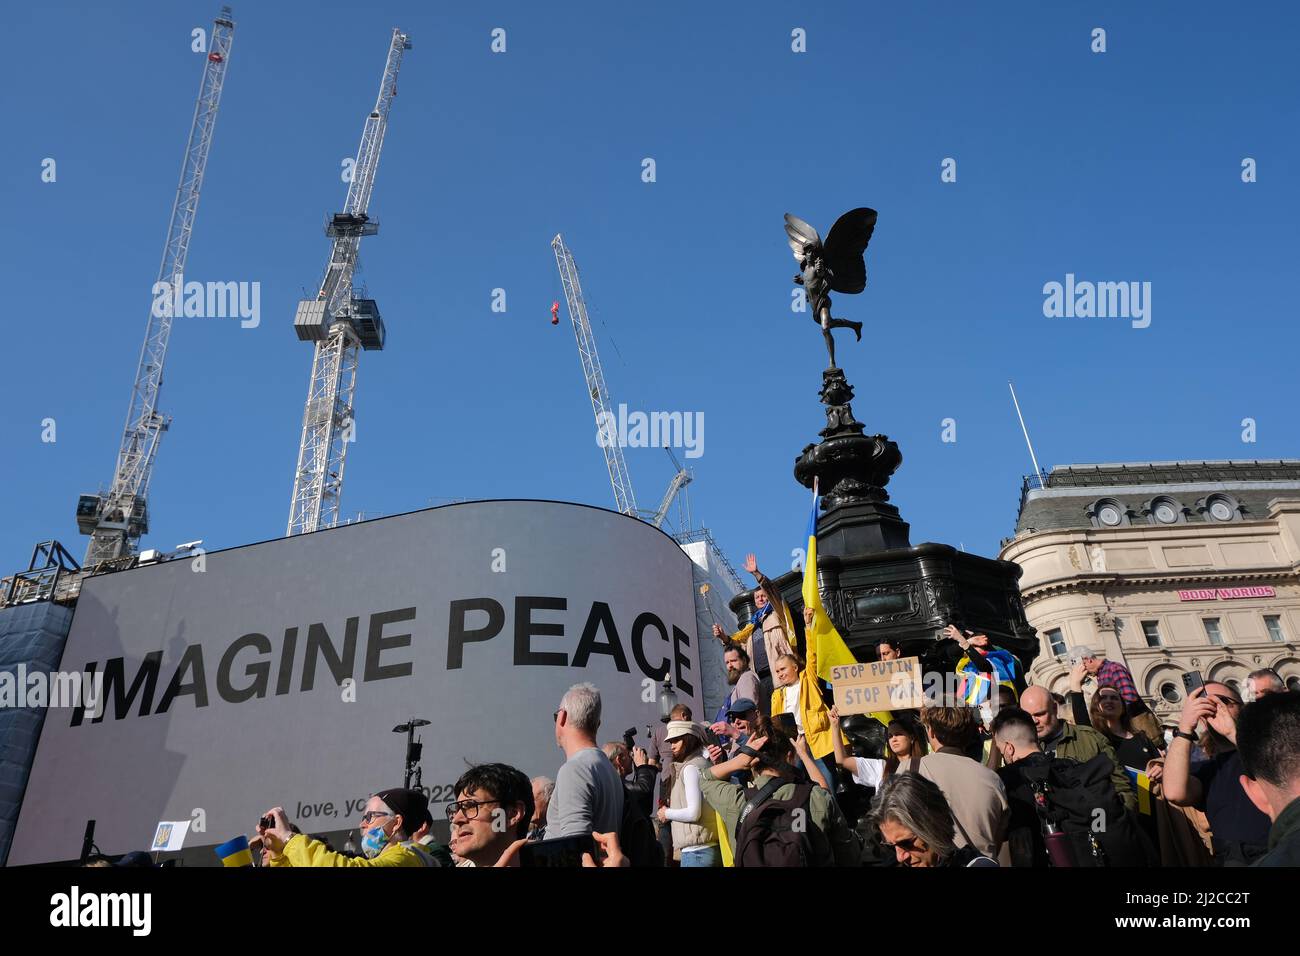 Yoko Ono's Imagine Peace, Ukraine Protest March, Central London Stock Photo